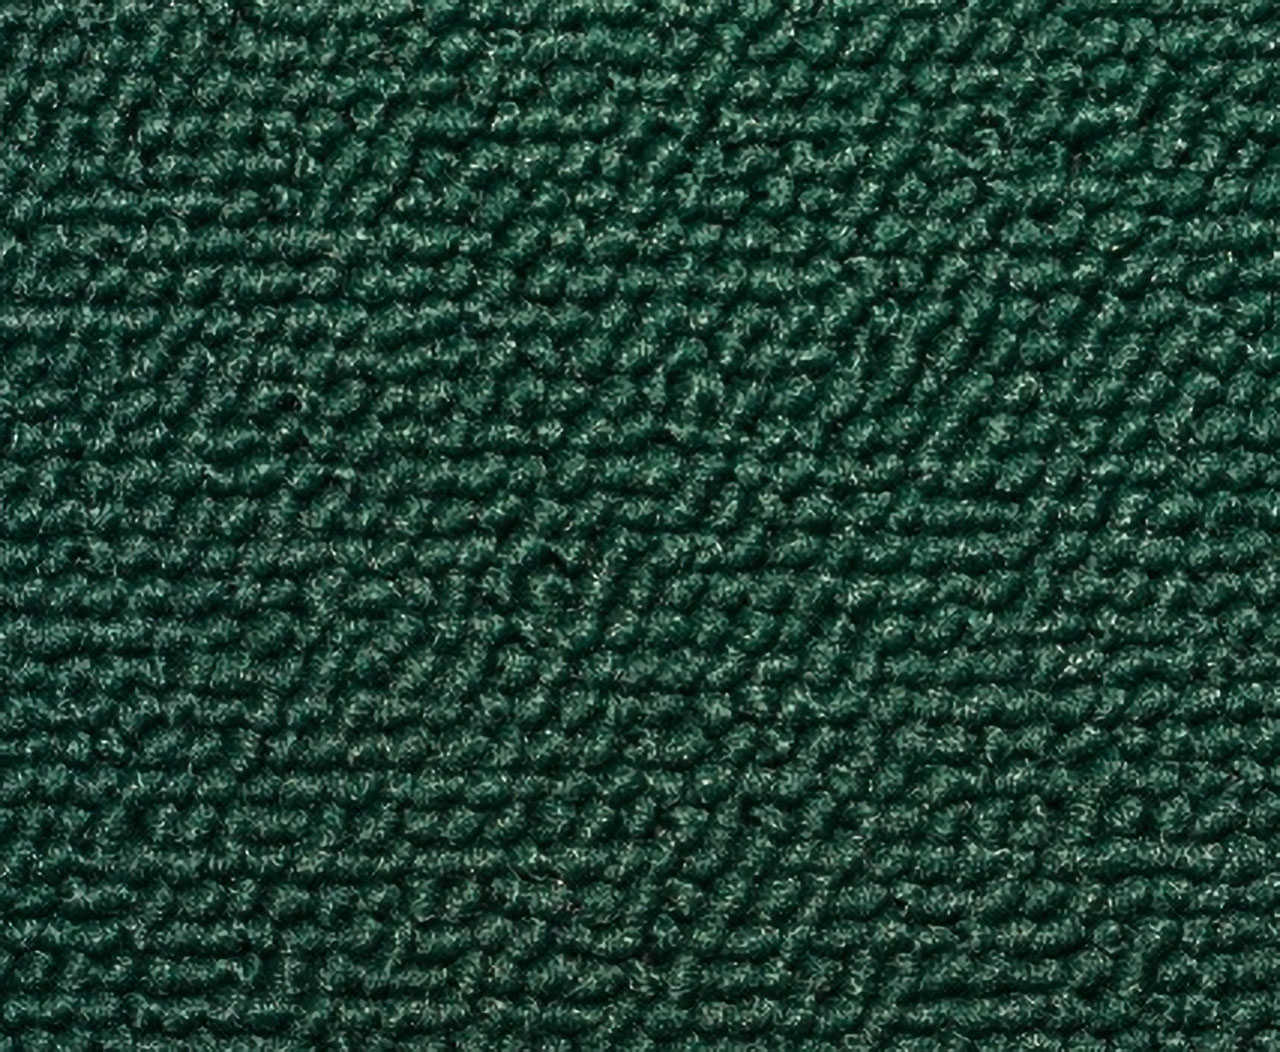 Holden Standard EJ Standard Wagon B07 Curio Green Carpet (Image 1 of 1)